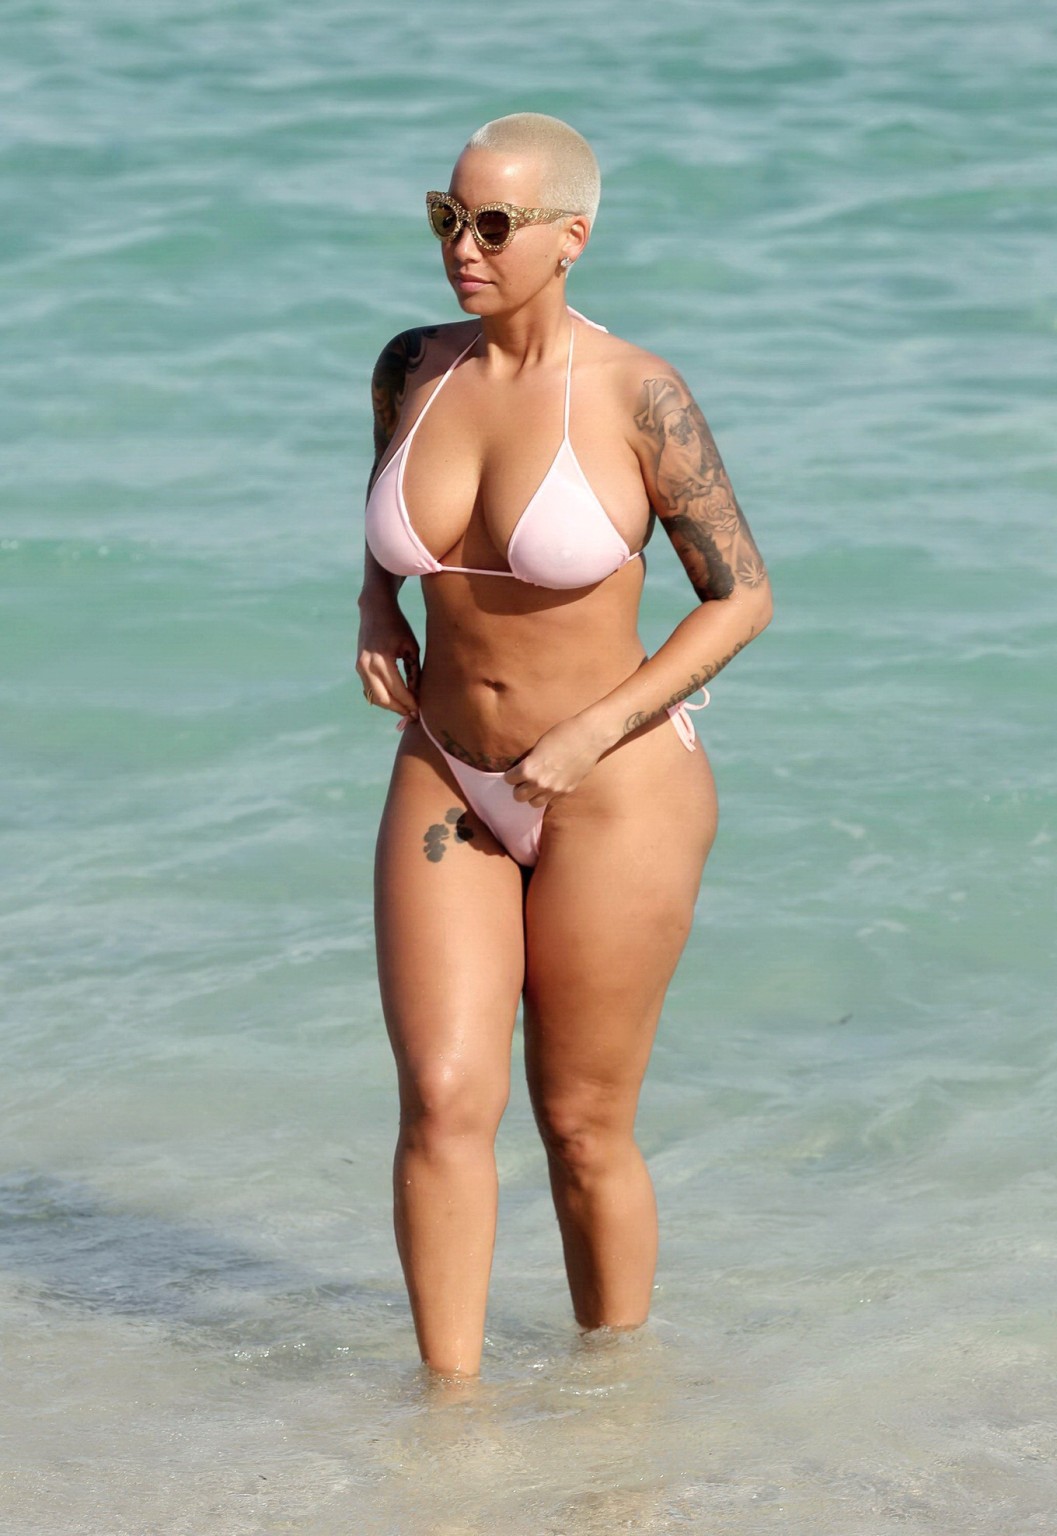 Amber rose con un bikini de tirantes en la playa de miami
 #75174897